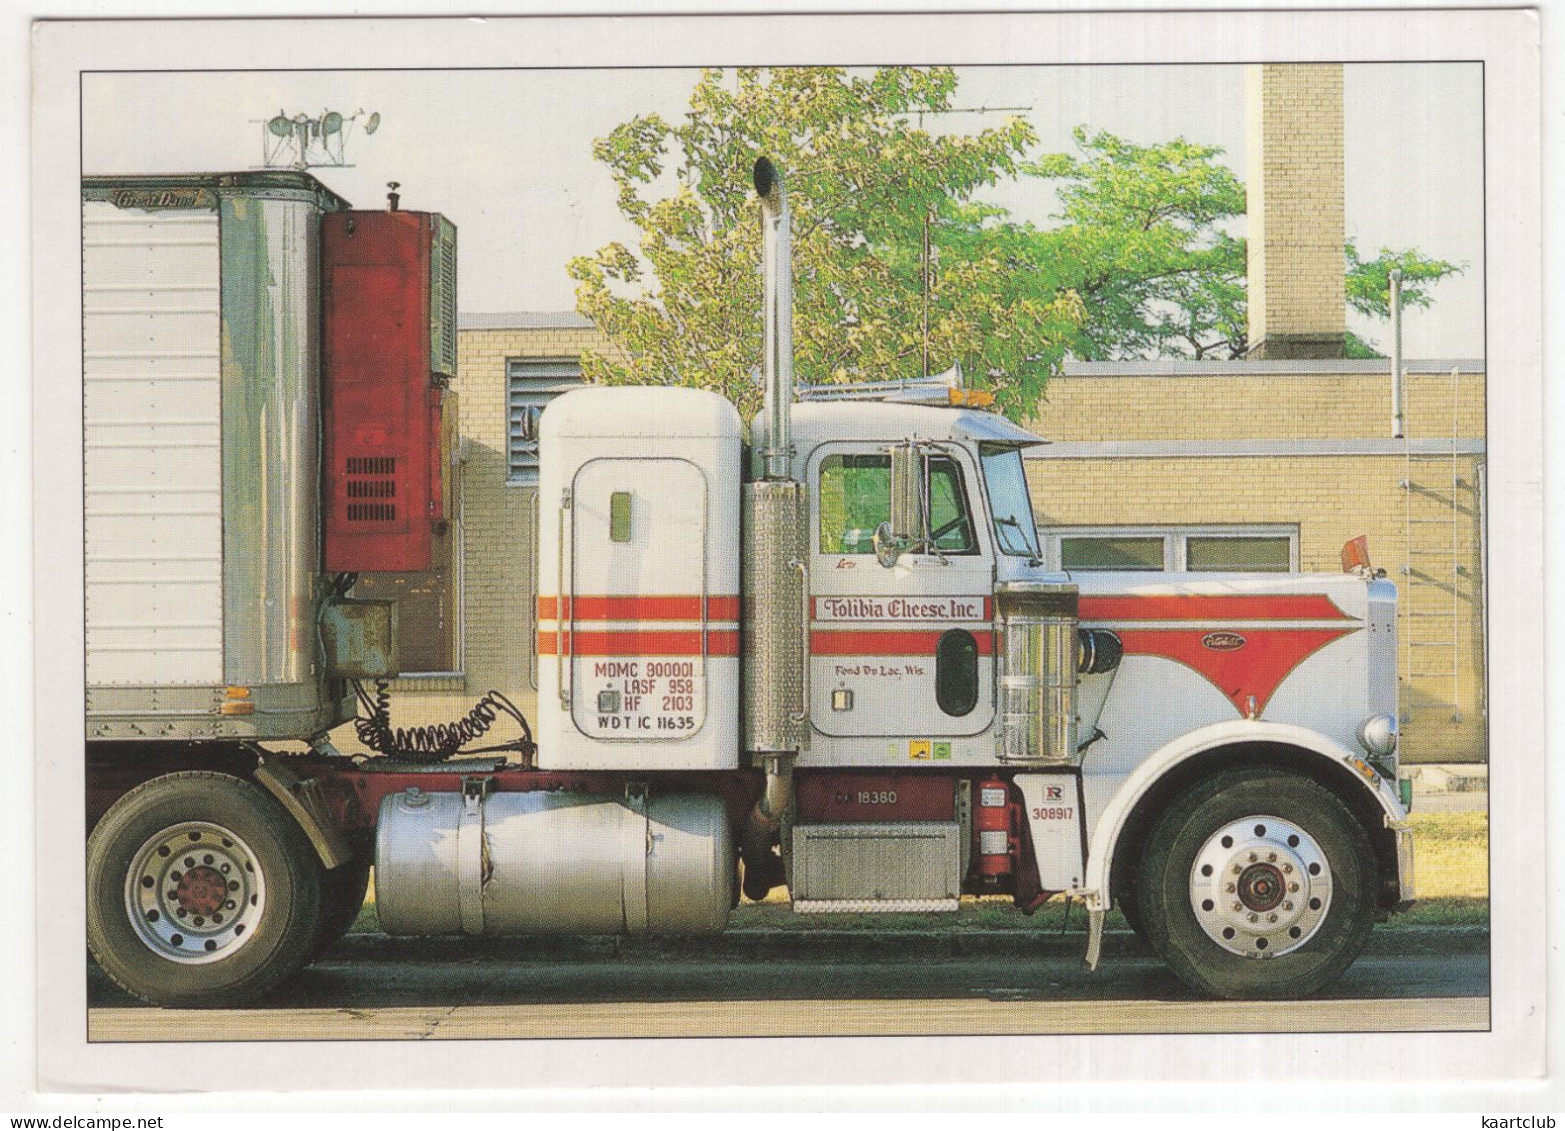 PETERBILT TRUCK - Tolibia Cheese Inc. - (CA., USA) - Camion, Tir